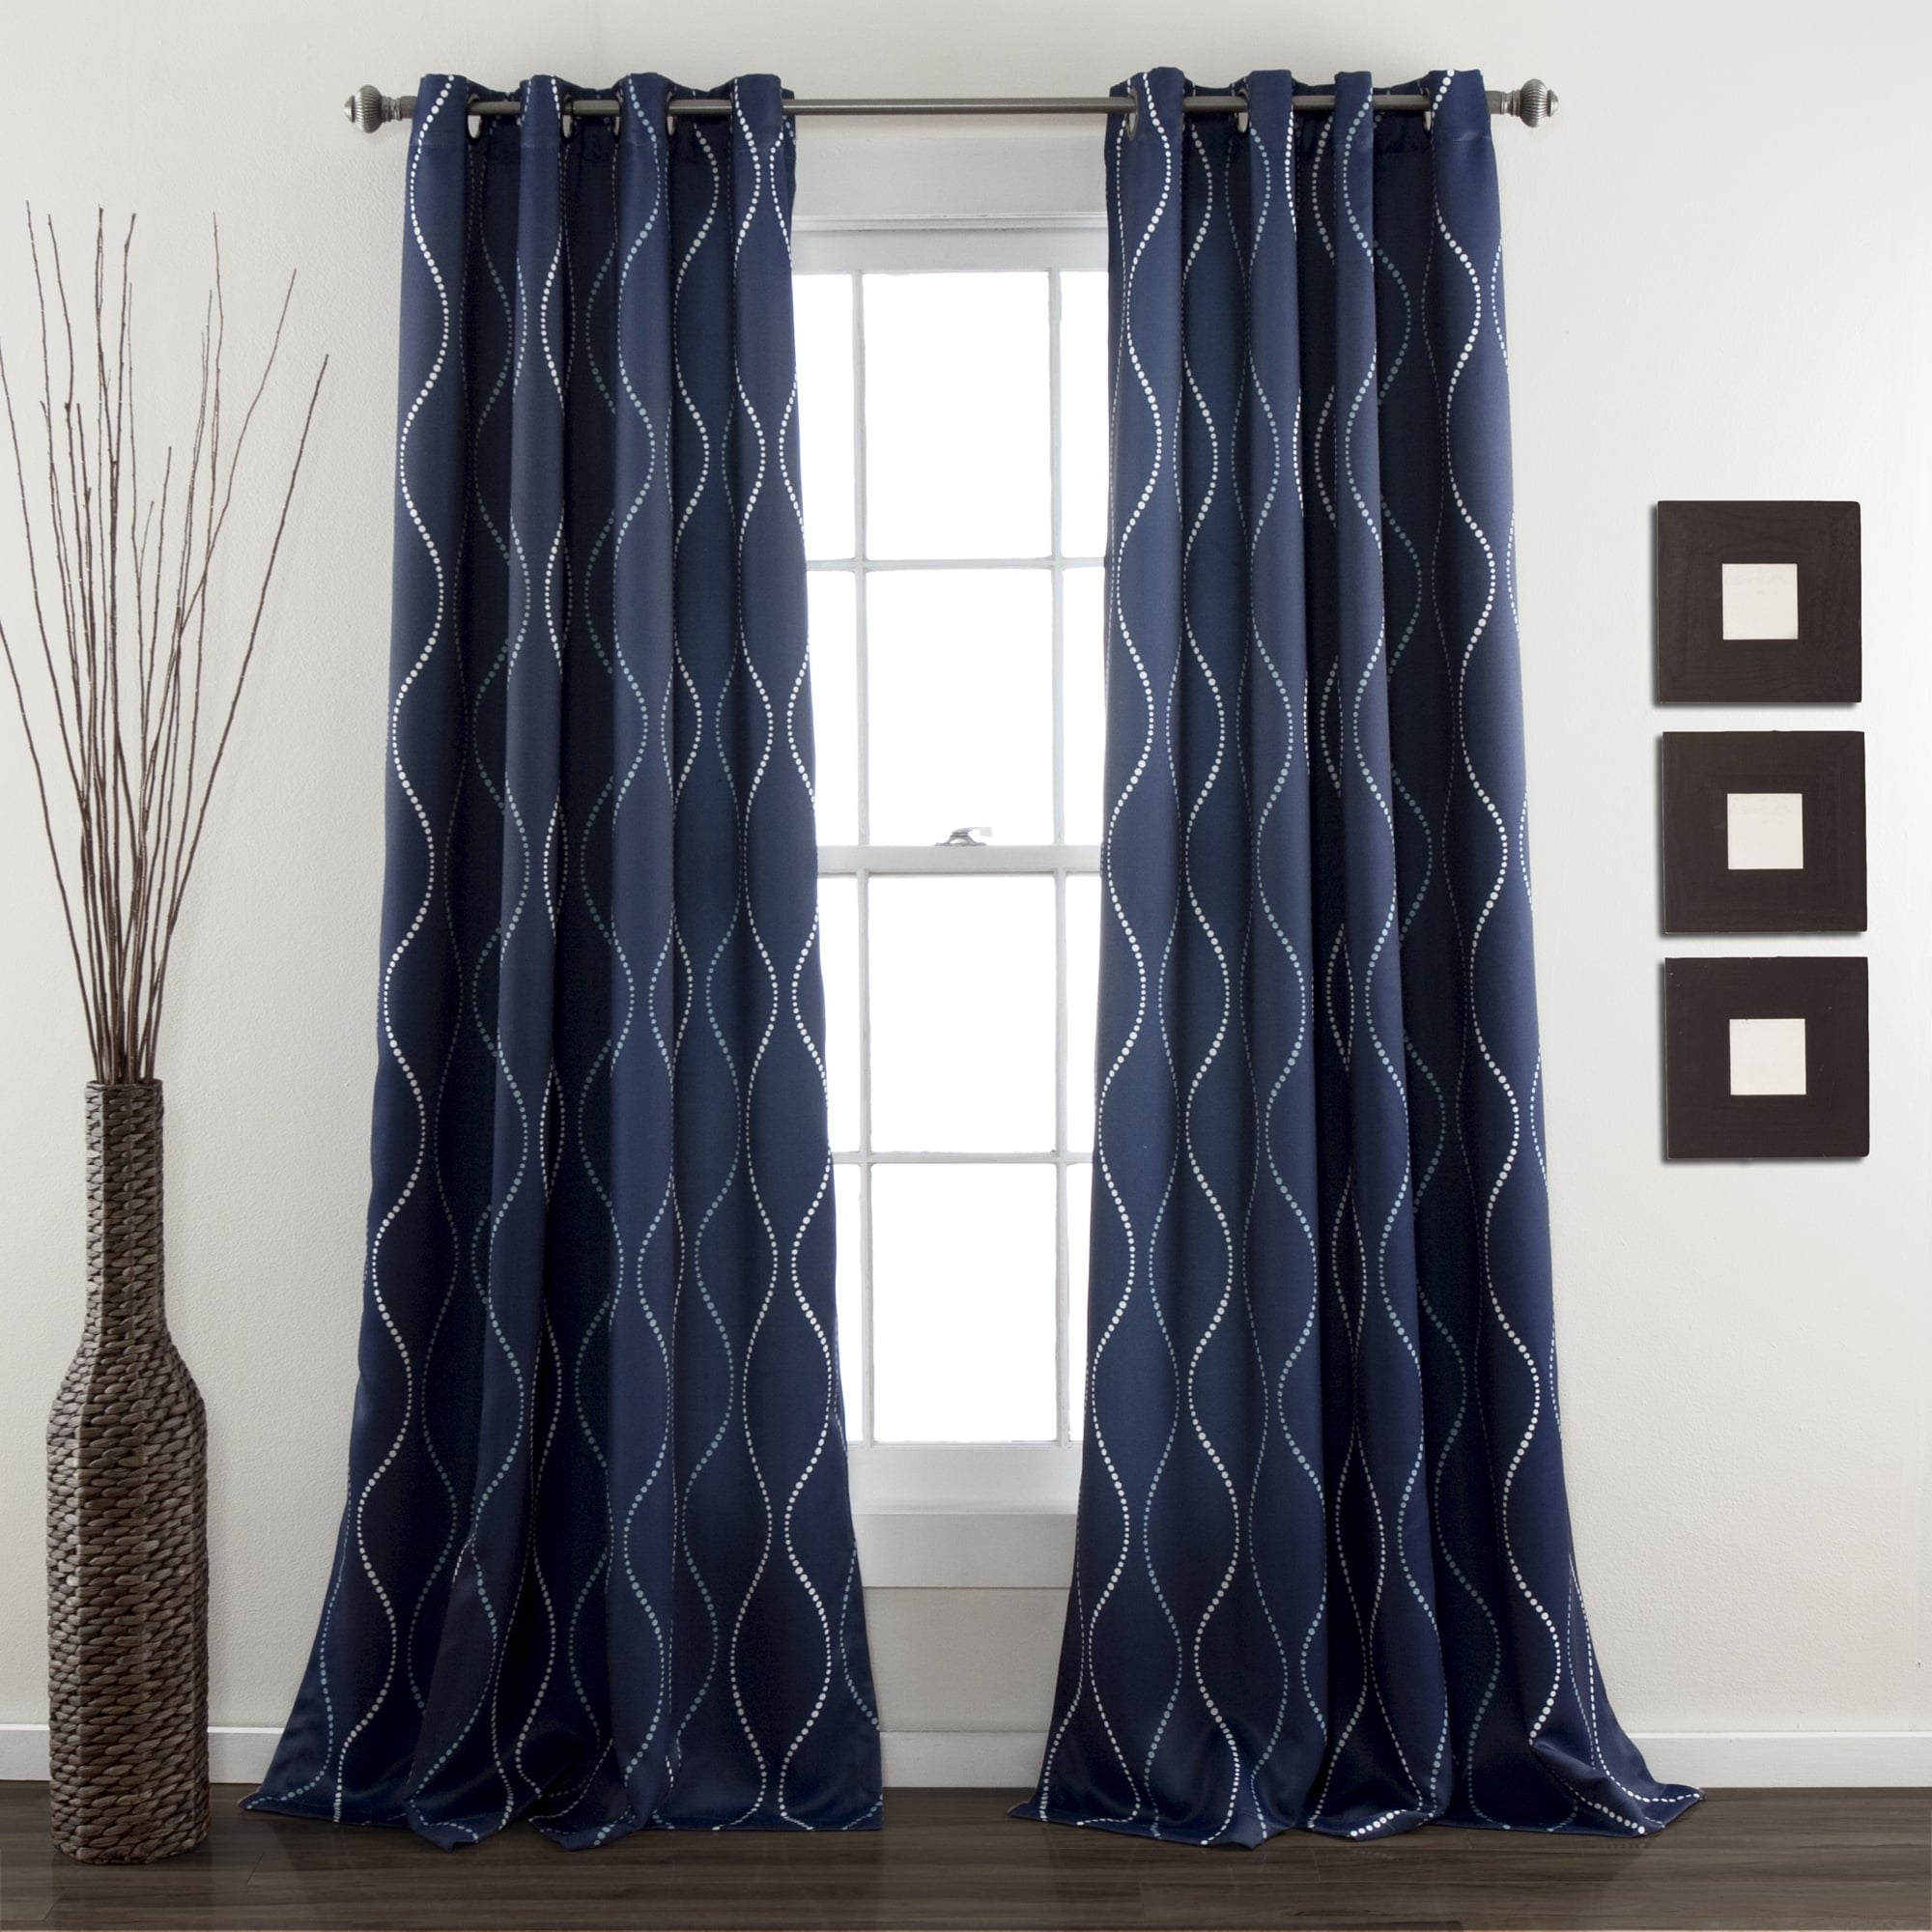 Lush Decor Sophie Room Darkening Curtain Window Panel Pair Set of 2 84 inch x 52 inch Blue 84X 52 